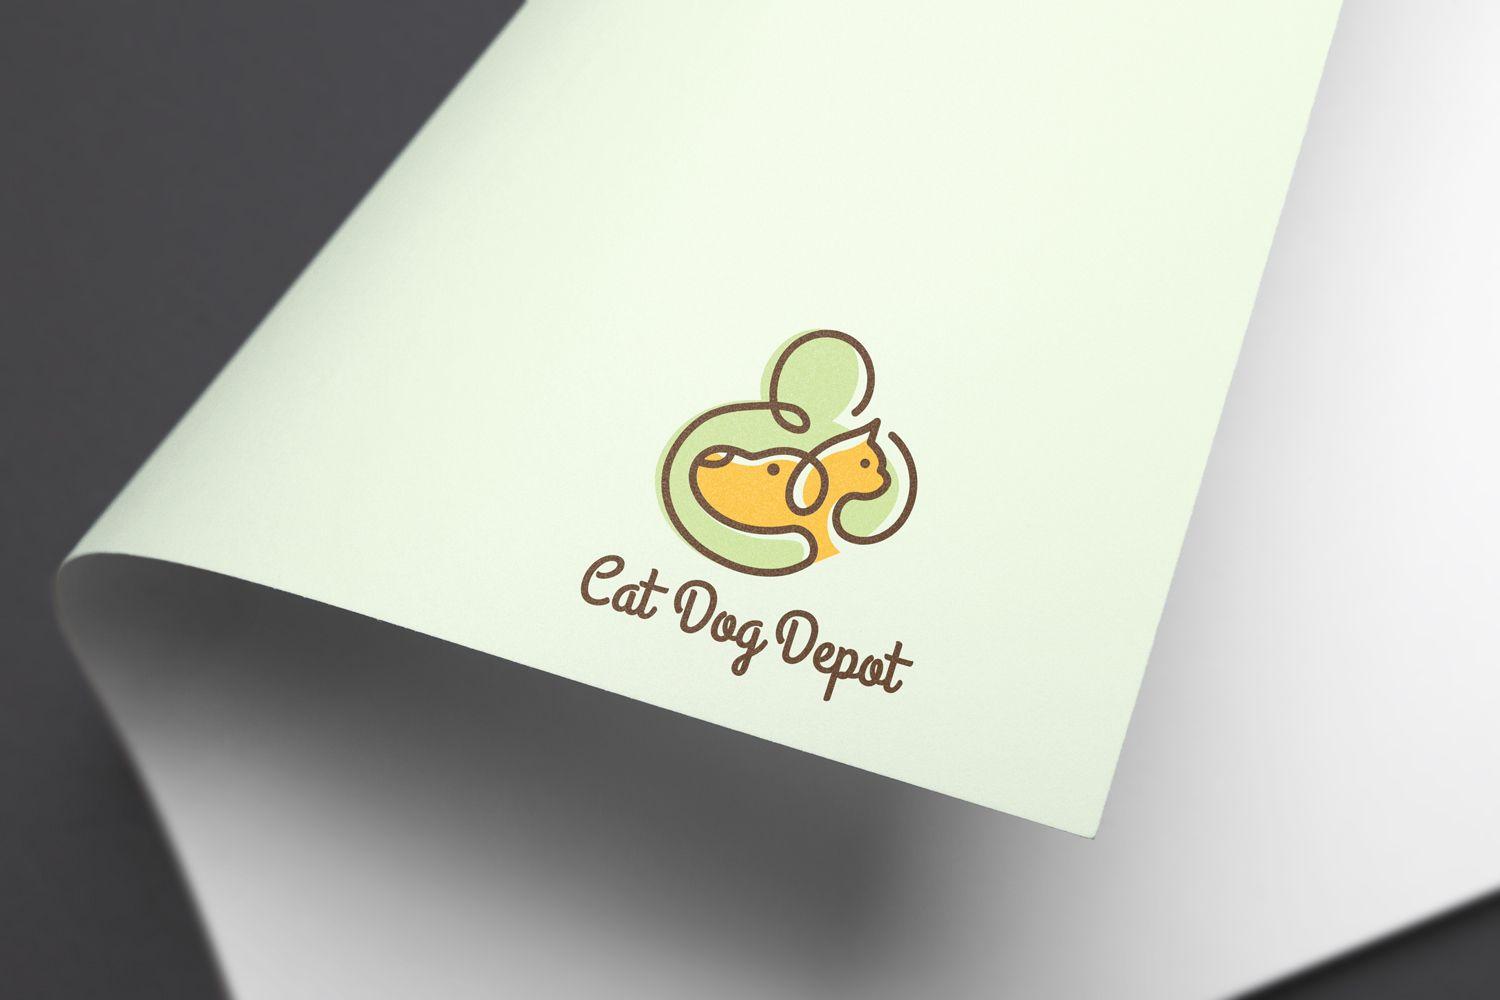 Catdog Logo - Cat Dog Depot. I designed this logo : logodesign